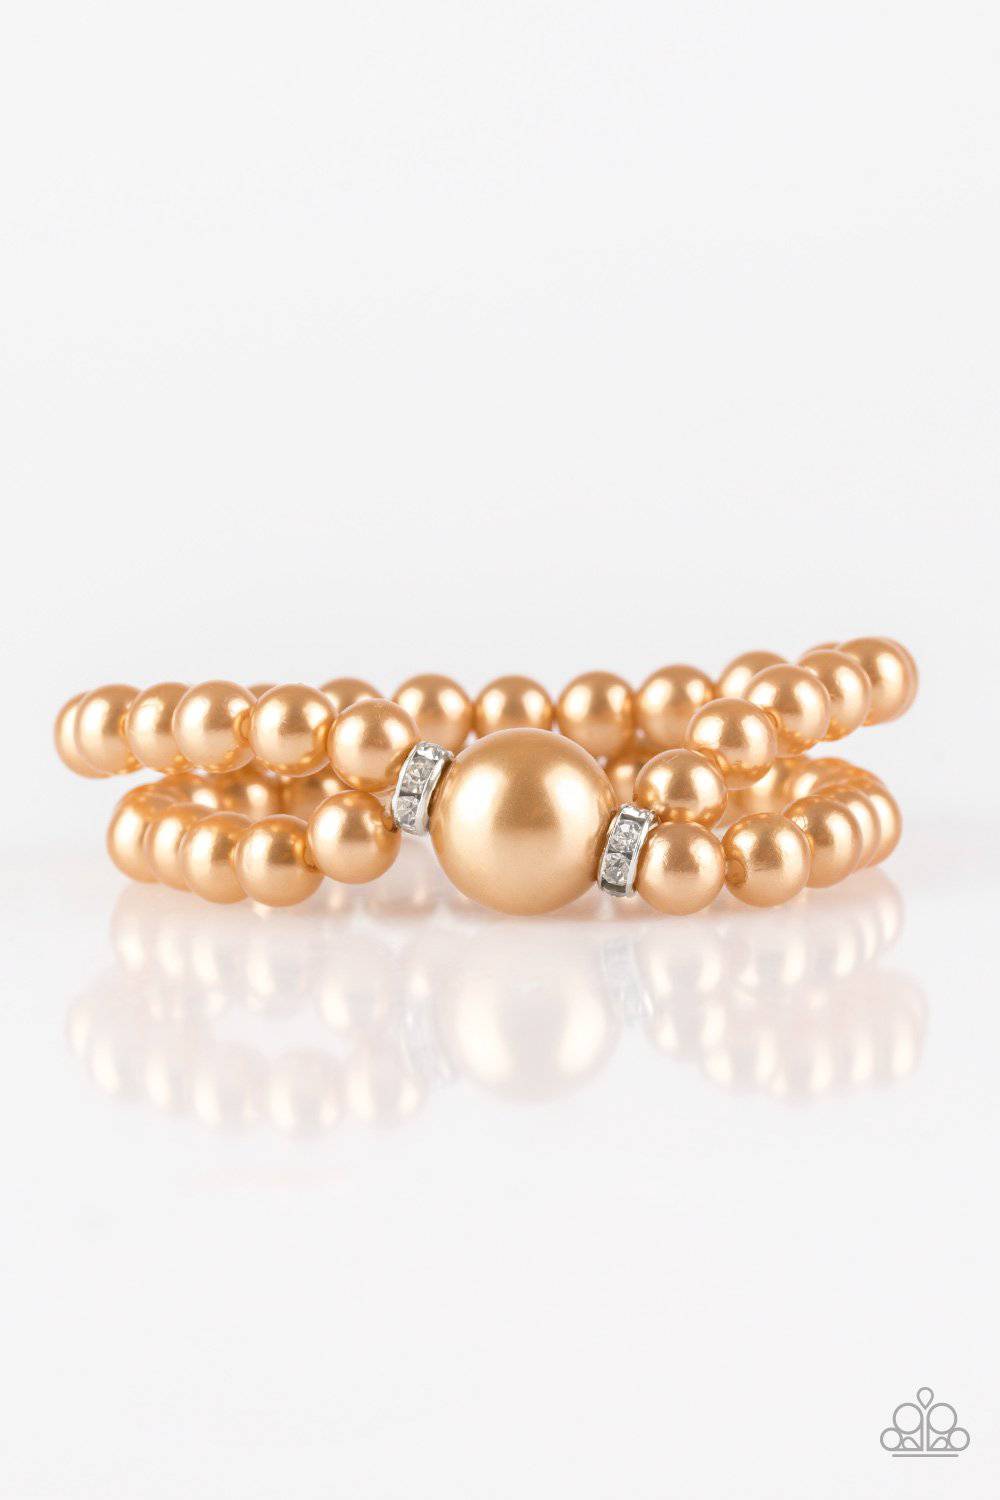 Romantic Redux - Brown Pearl Stretchy Bracelet - Paparazzi Accessories - GlaMarous Titi Jewels